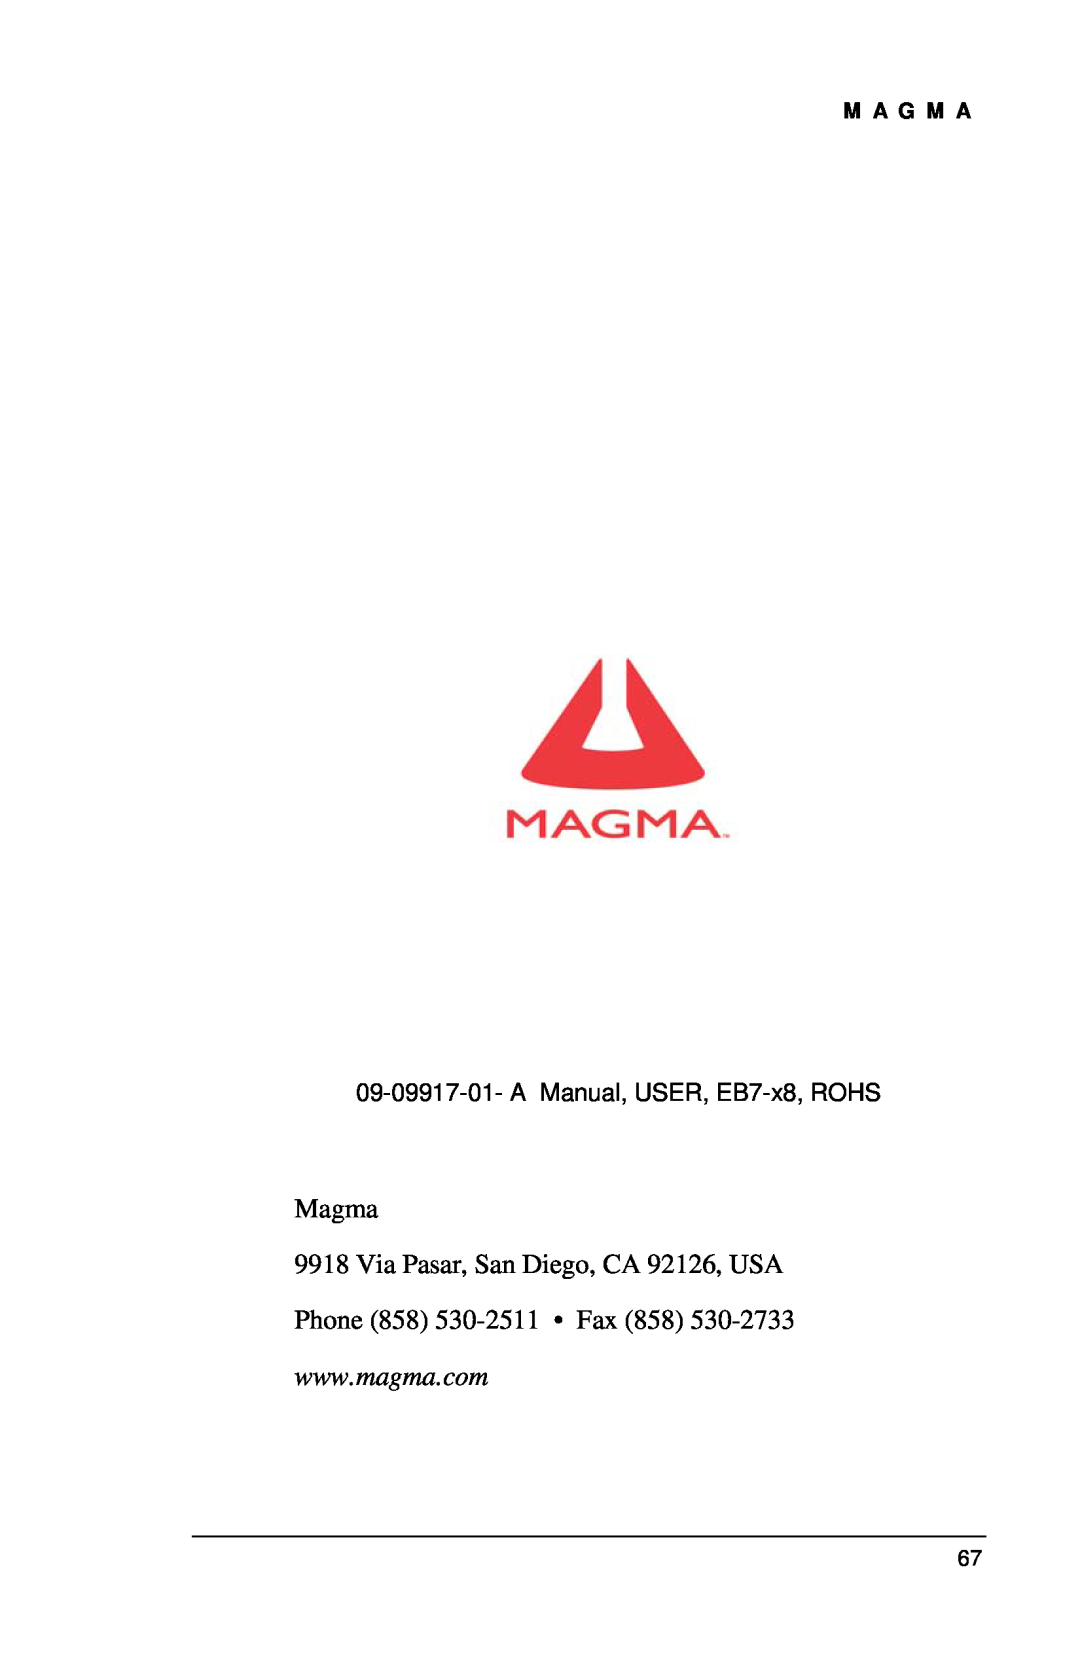 Magma EB7R-x8 Magma 9918 Via Pasar, San Diego, CA 92126, USA, Phone 858 530-2511 Fax 858, A Manual, USER, EB7-x8, ROHS 